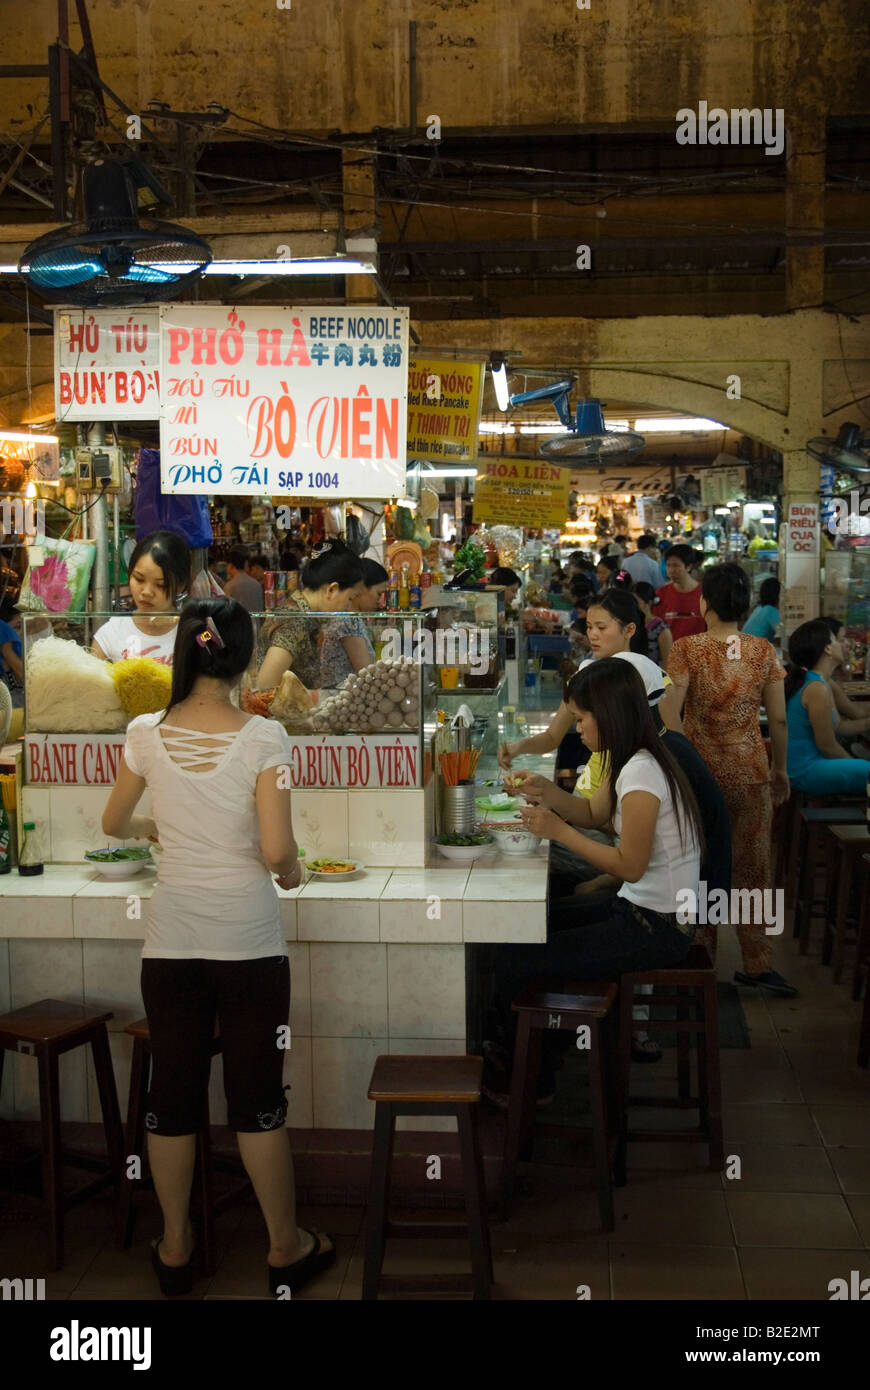 Vietnamese people eating at Ben Thanh Market, Saigon Stock Photo